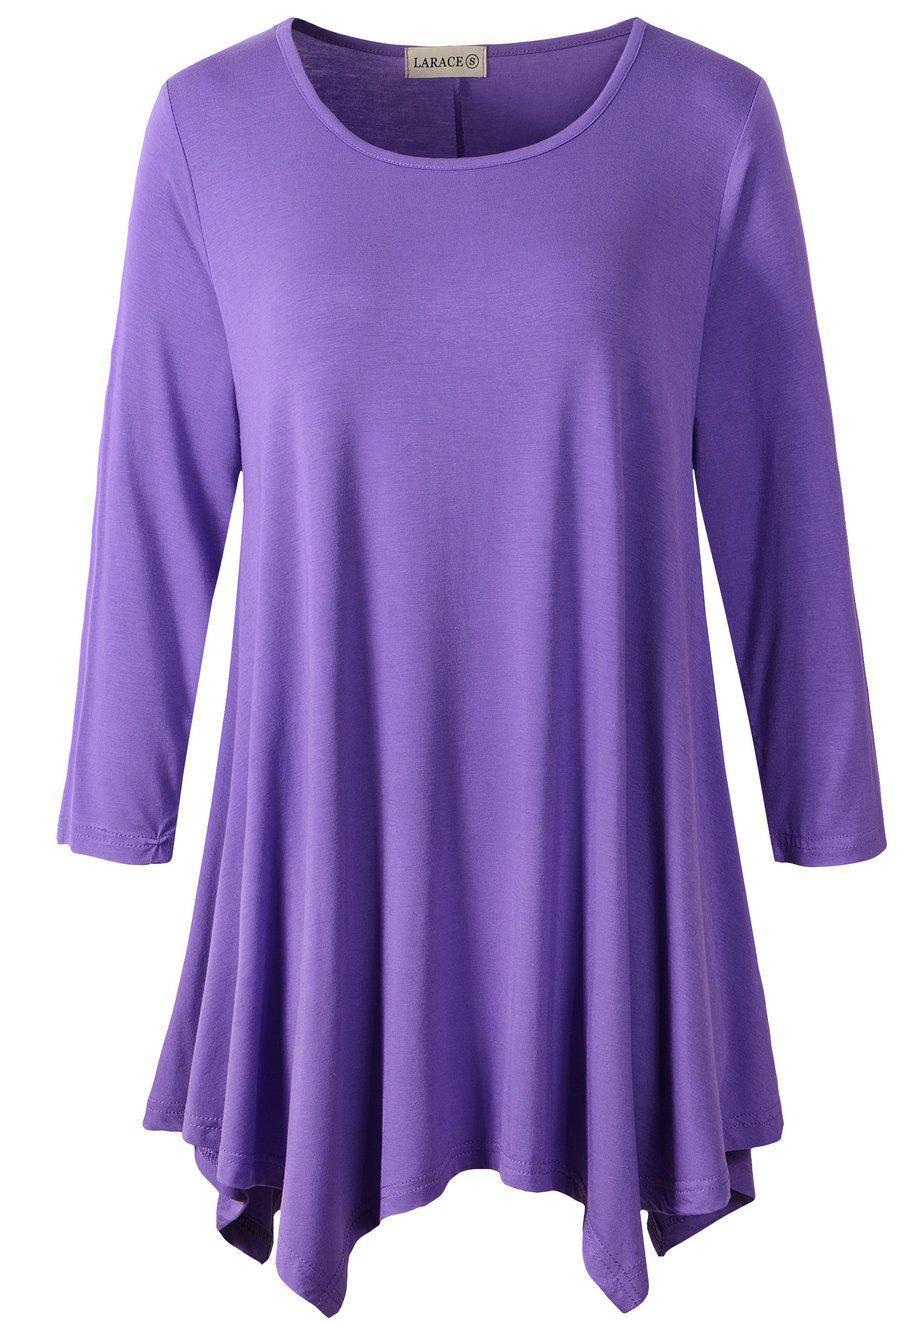 Latest Ladies Fashion Clothes Online,Online Women Clothing Shop & Latest Clothing 3/4 Sleeve Plus Size Tunic Tops Loose Basic Shirt 8028 S-3 XL.